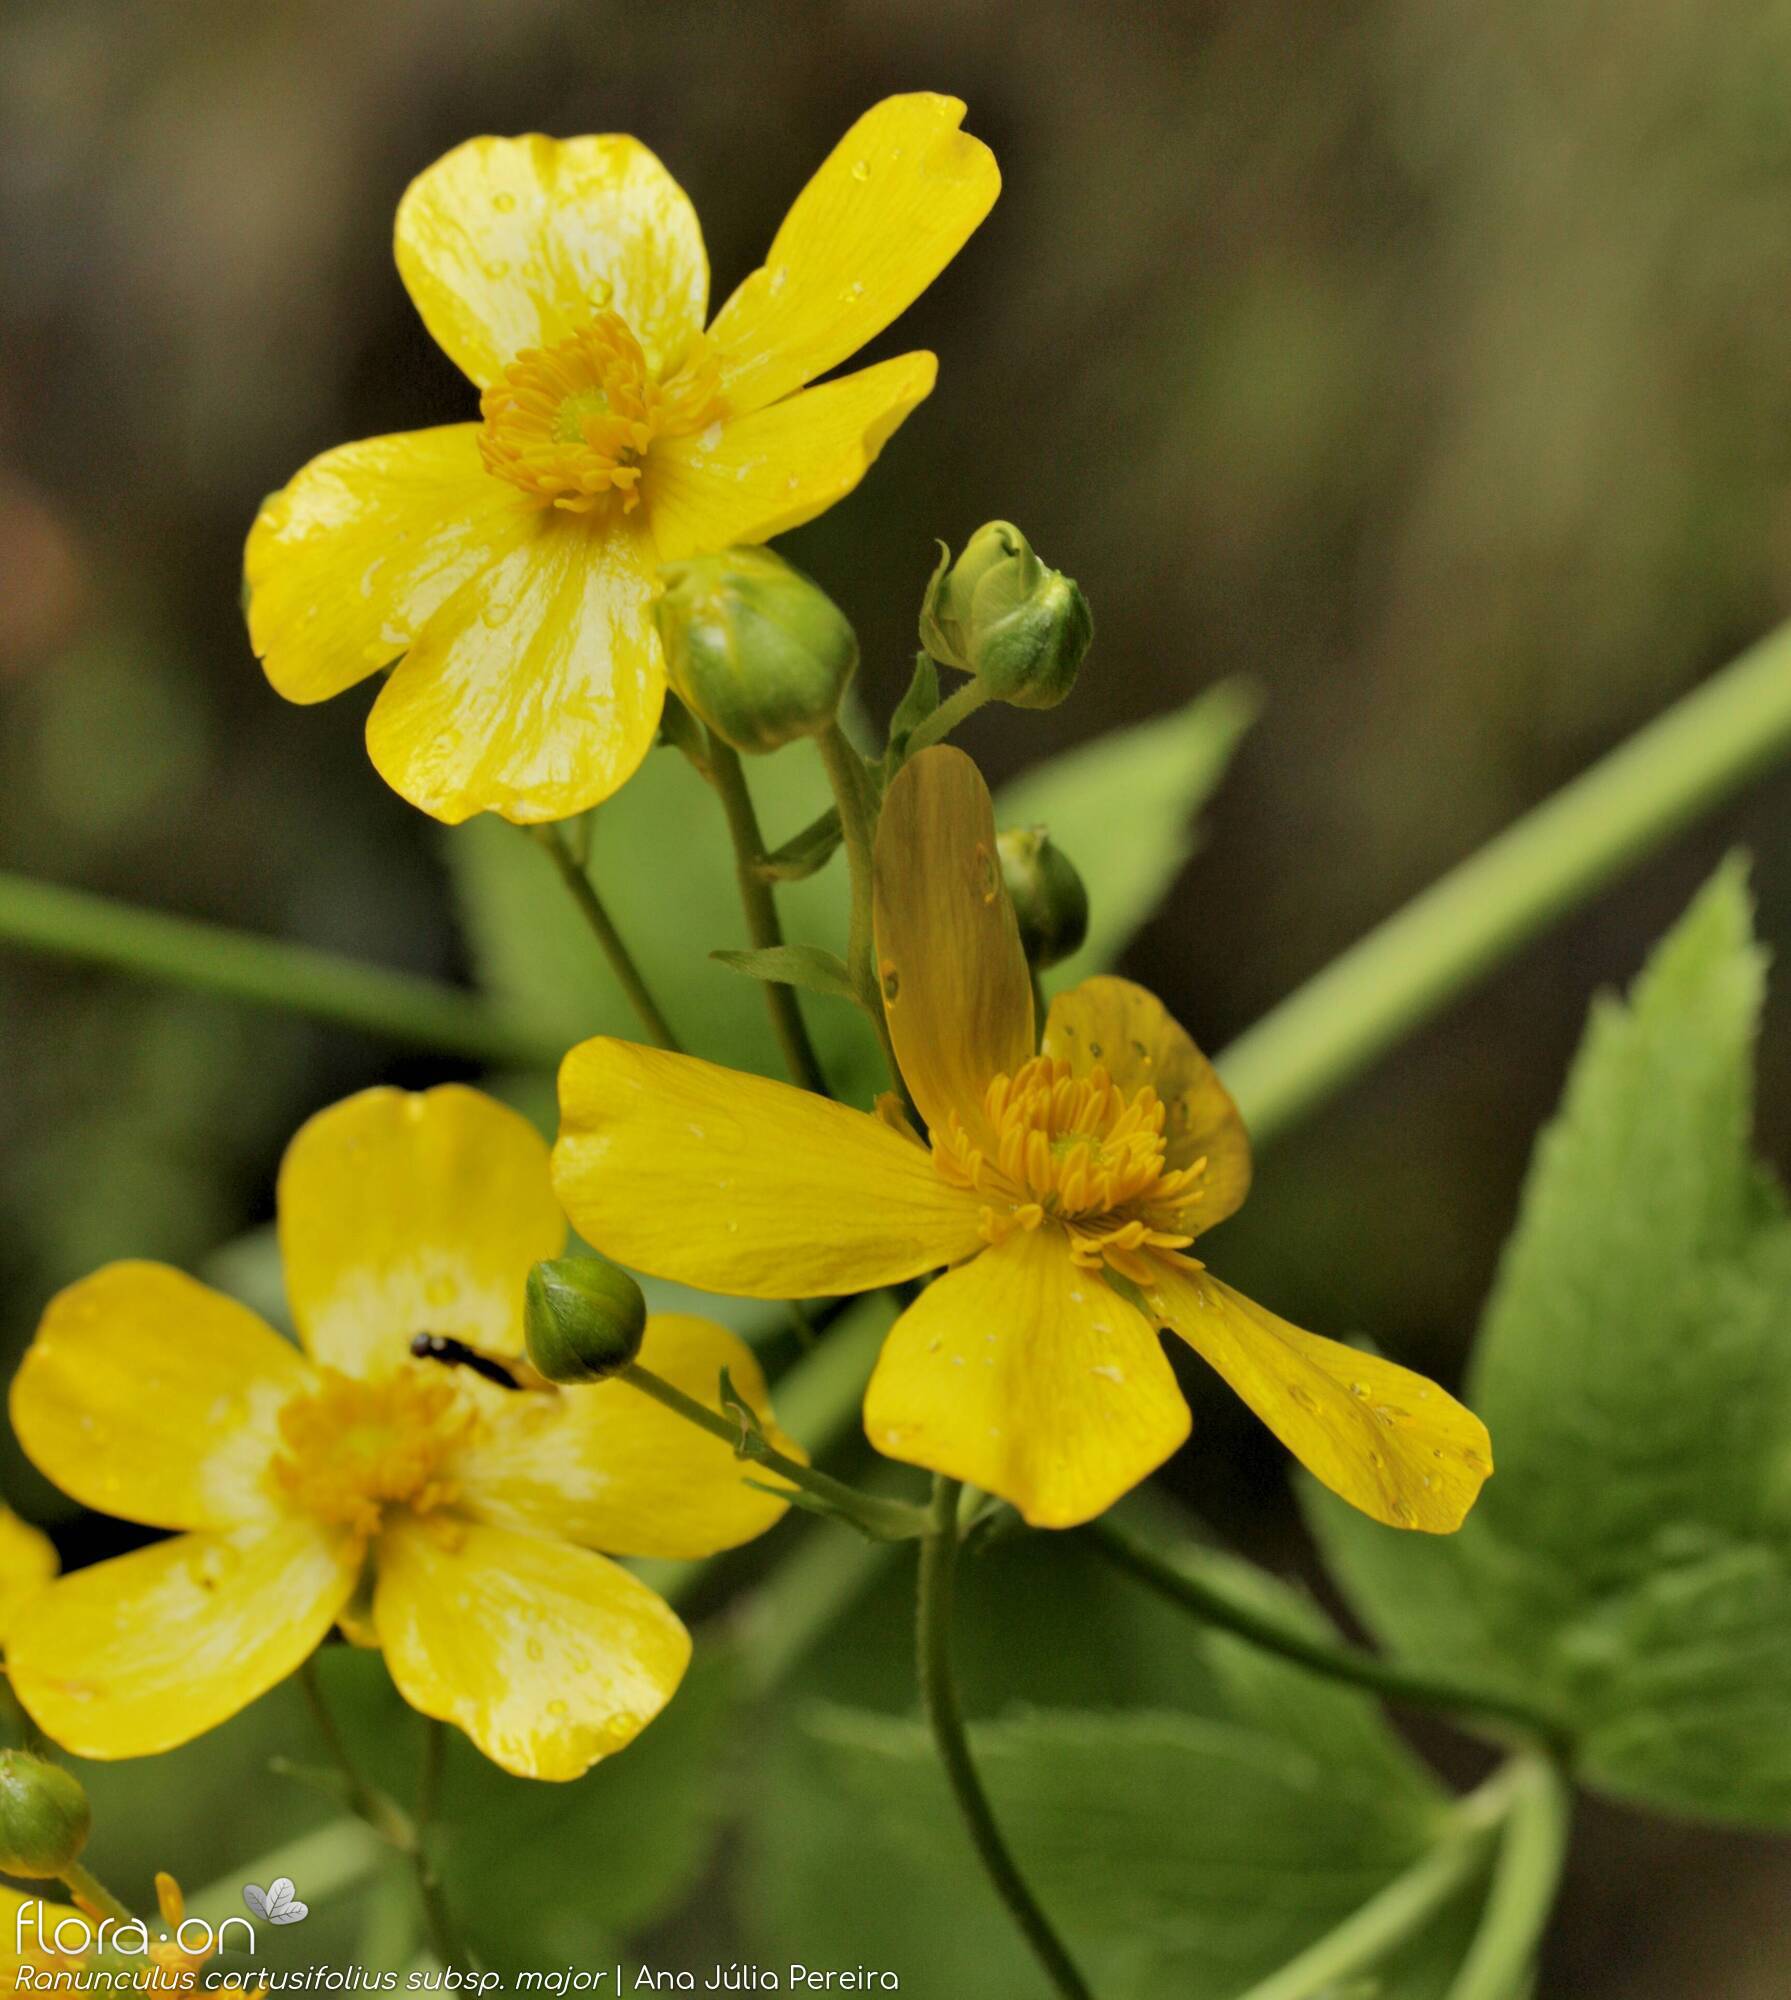 Ranunculus cortusifolius major - Flor (geral) | Ana Júlia Pereira; CC BY-NC 4.0